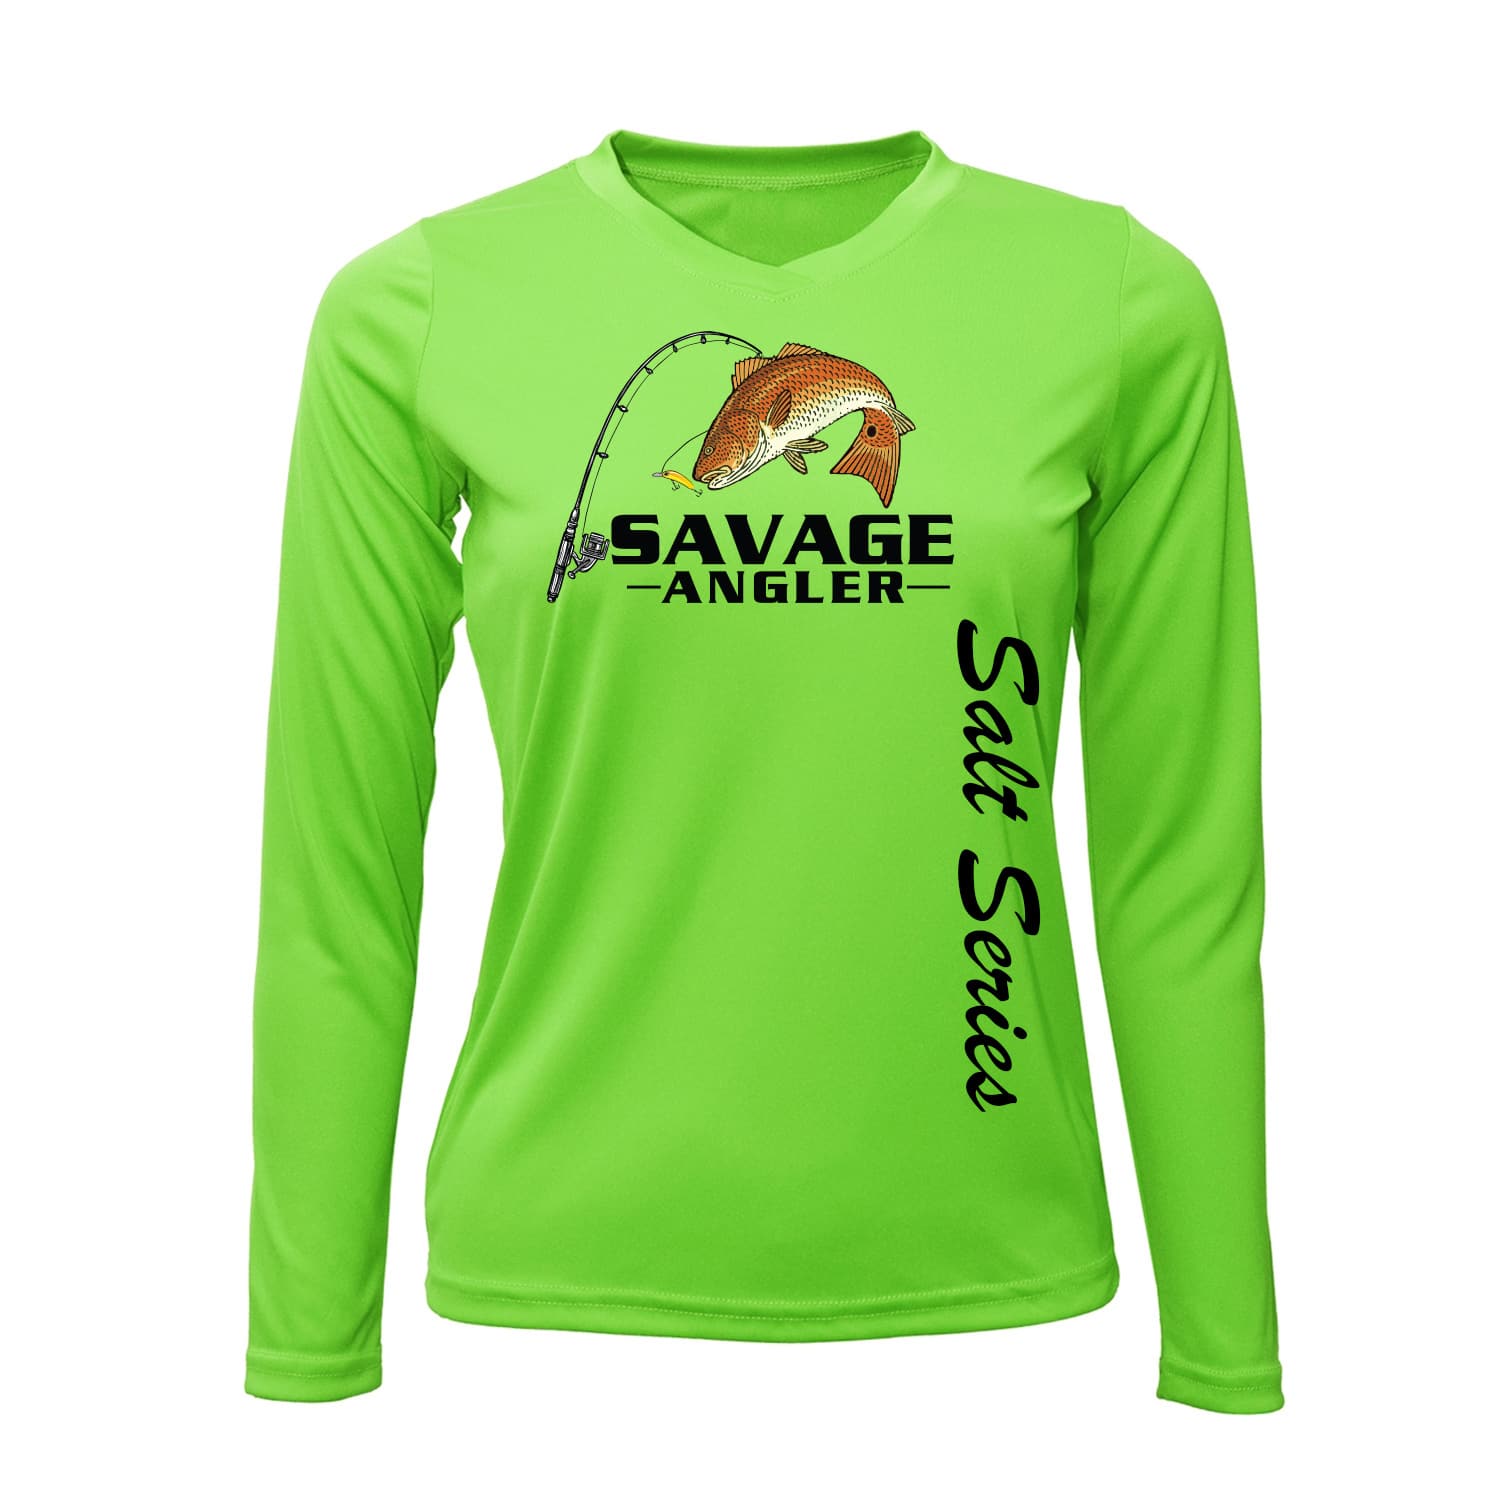 https://savageangler.com/wp-content/uploads/2021/03/Savage-Angler-Womens-Performance-Shirt_Neon_Green_Front-1.jpg